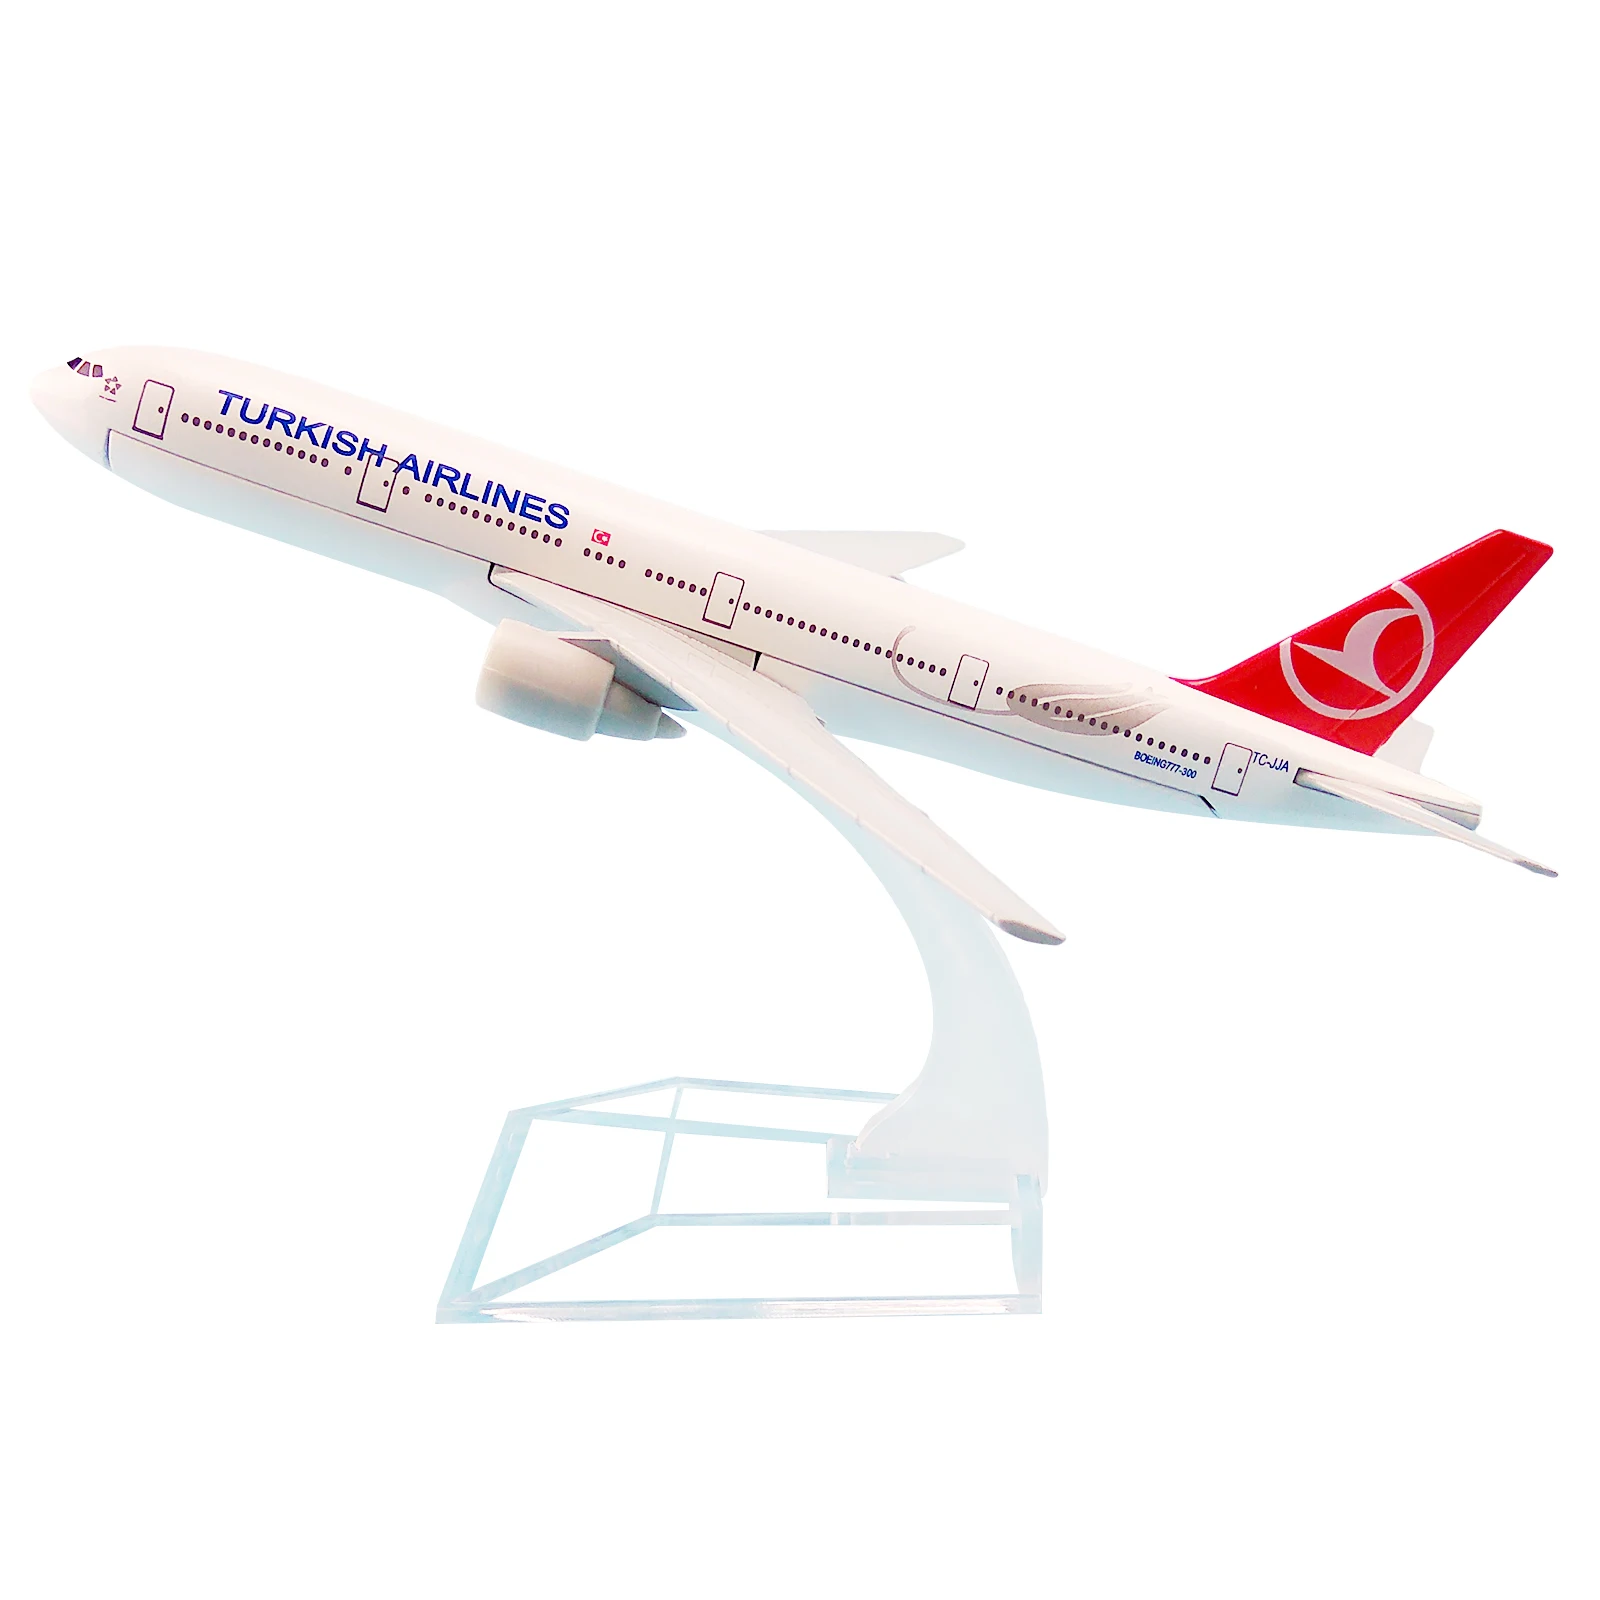 Alloy Metal Air Turkish Airlines B777 Airplane Model Turkish Boeing 777 Airways Diecast Air Plane Model Aircraft Kids Gifts 16cm